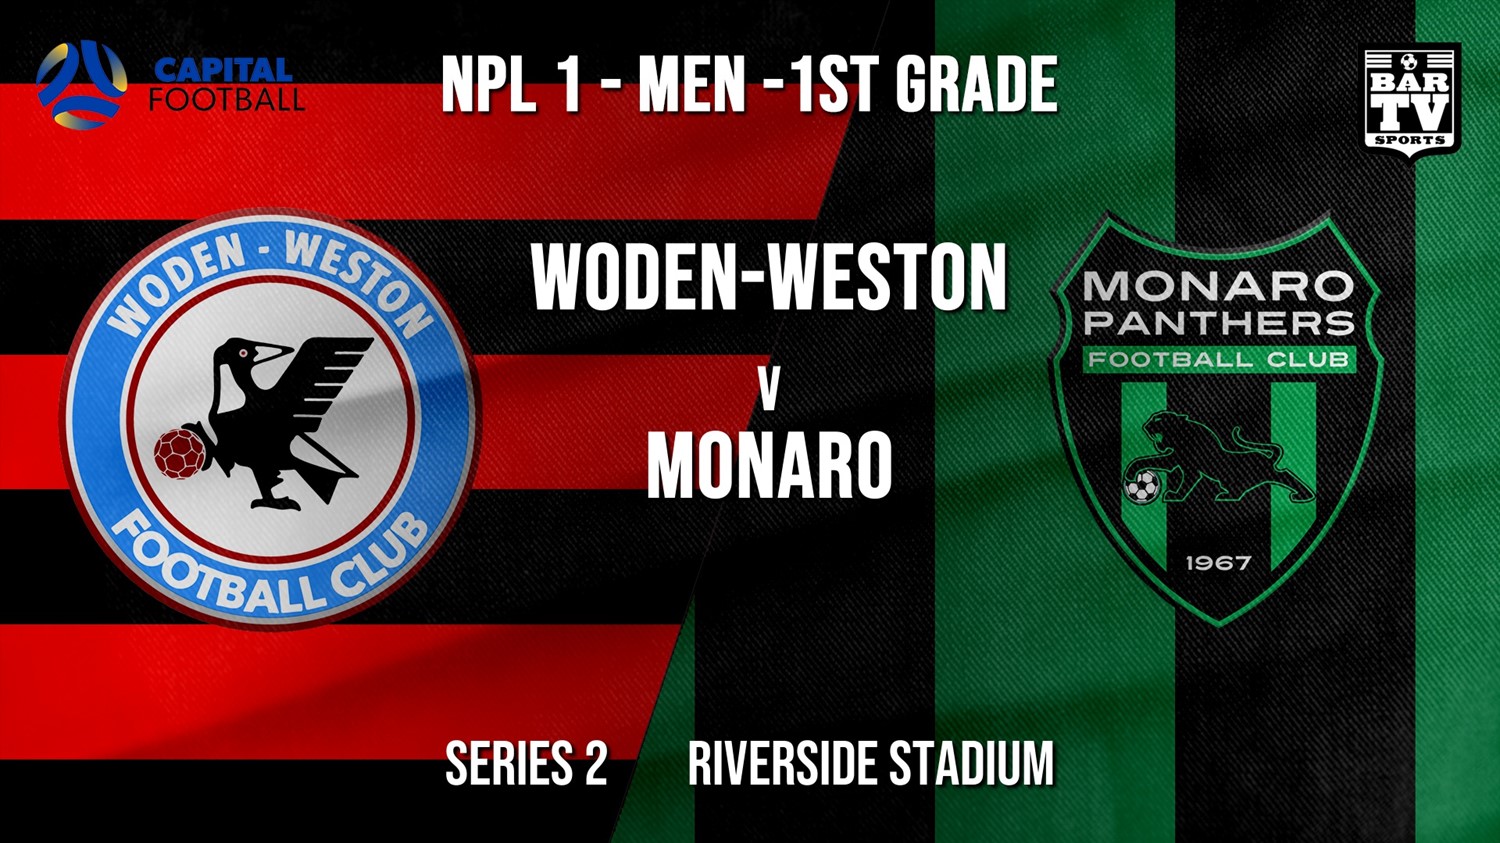 NPL - CAPITAL Series 2 - Woden-Weston FC v Monaro Panthers FC Minigame Slate Image